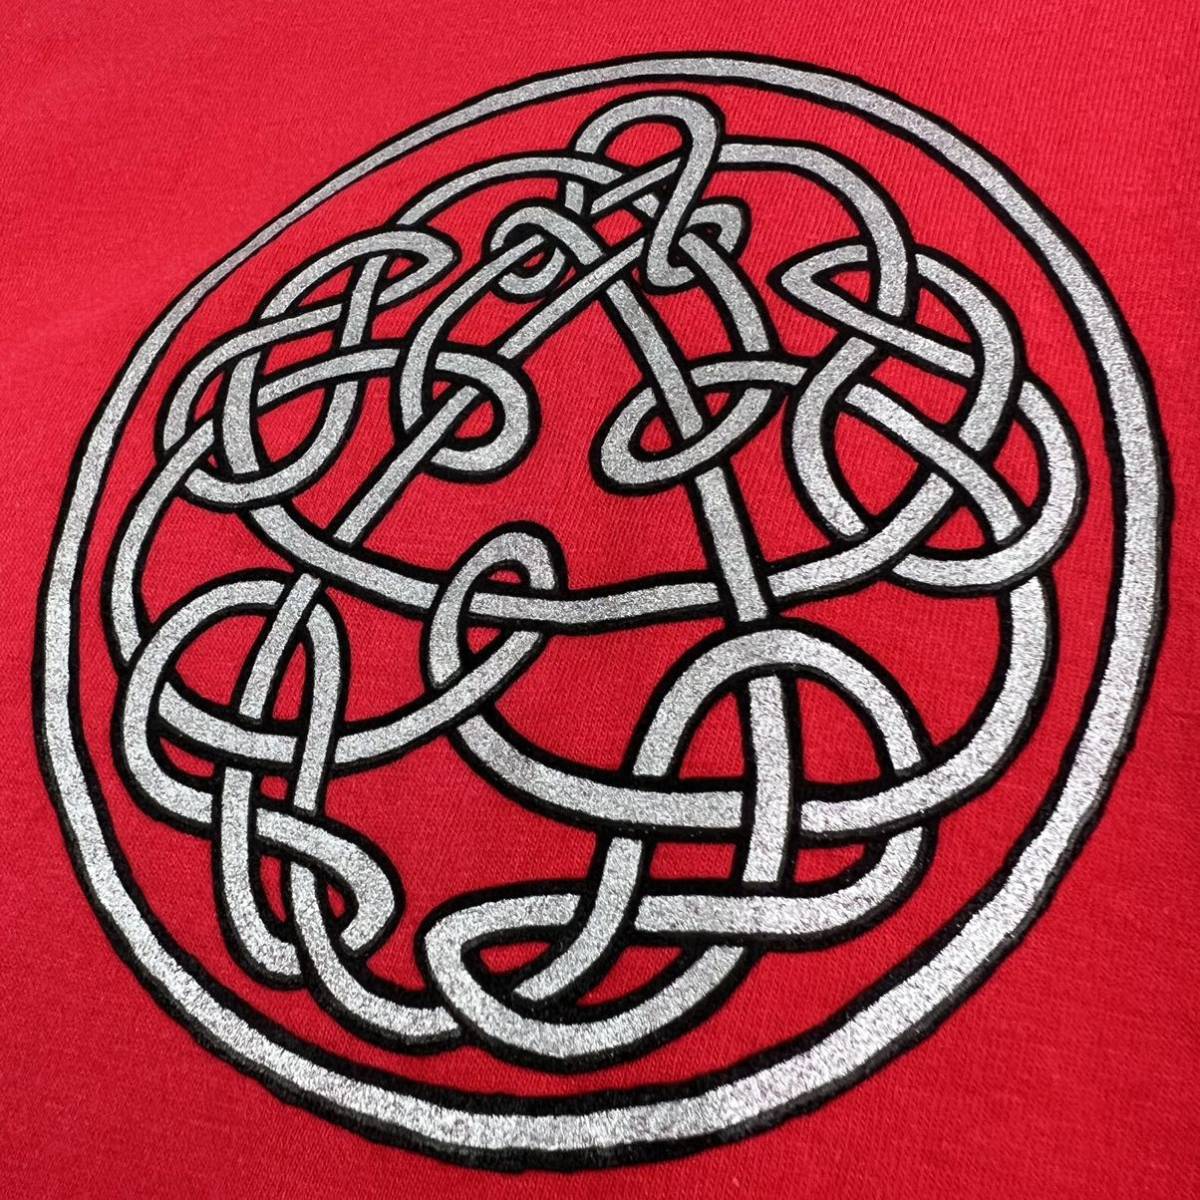  Vintage 90s[KING CRIMSON] футболка USA производства L King Crimson б/у одежда Британия UK блокировка T частота T Progres PINK FLOYD LED ZEPPELIN YES